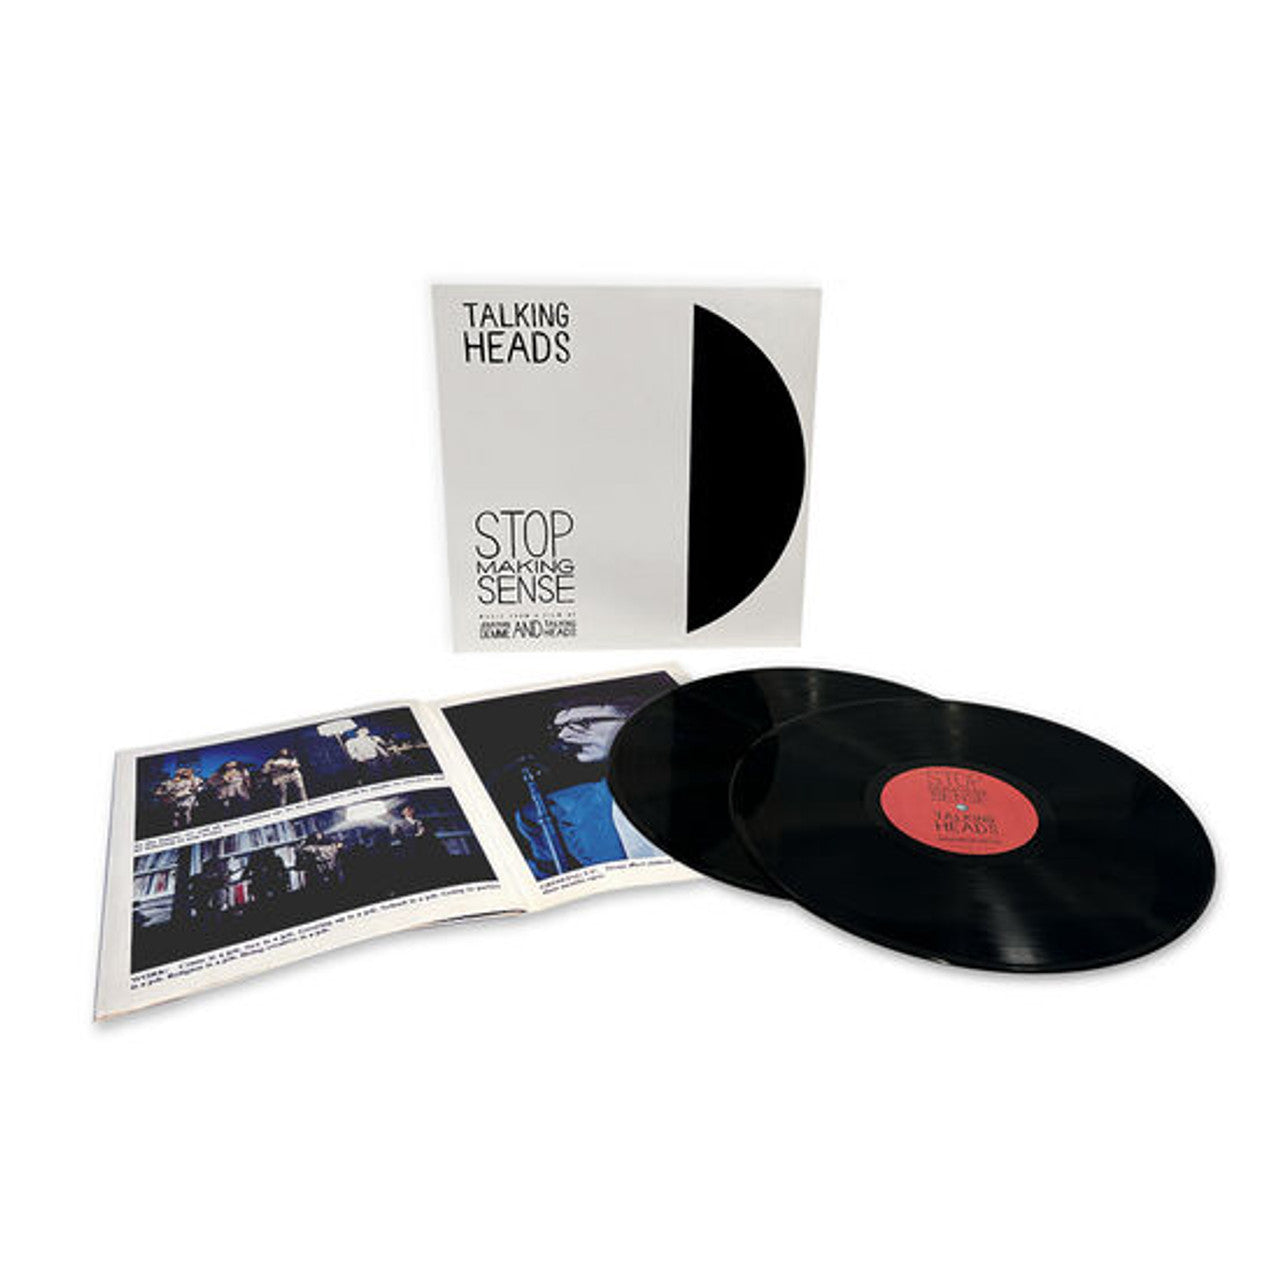 Buy Talking Heads - Stop Making Sense (Deluxe 2xLP Black Vinyl)